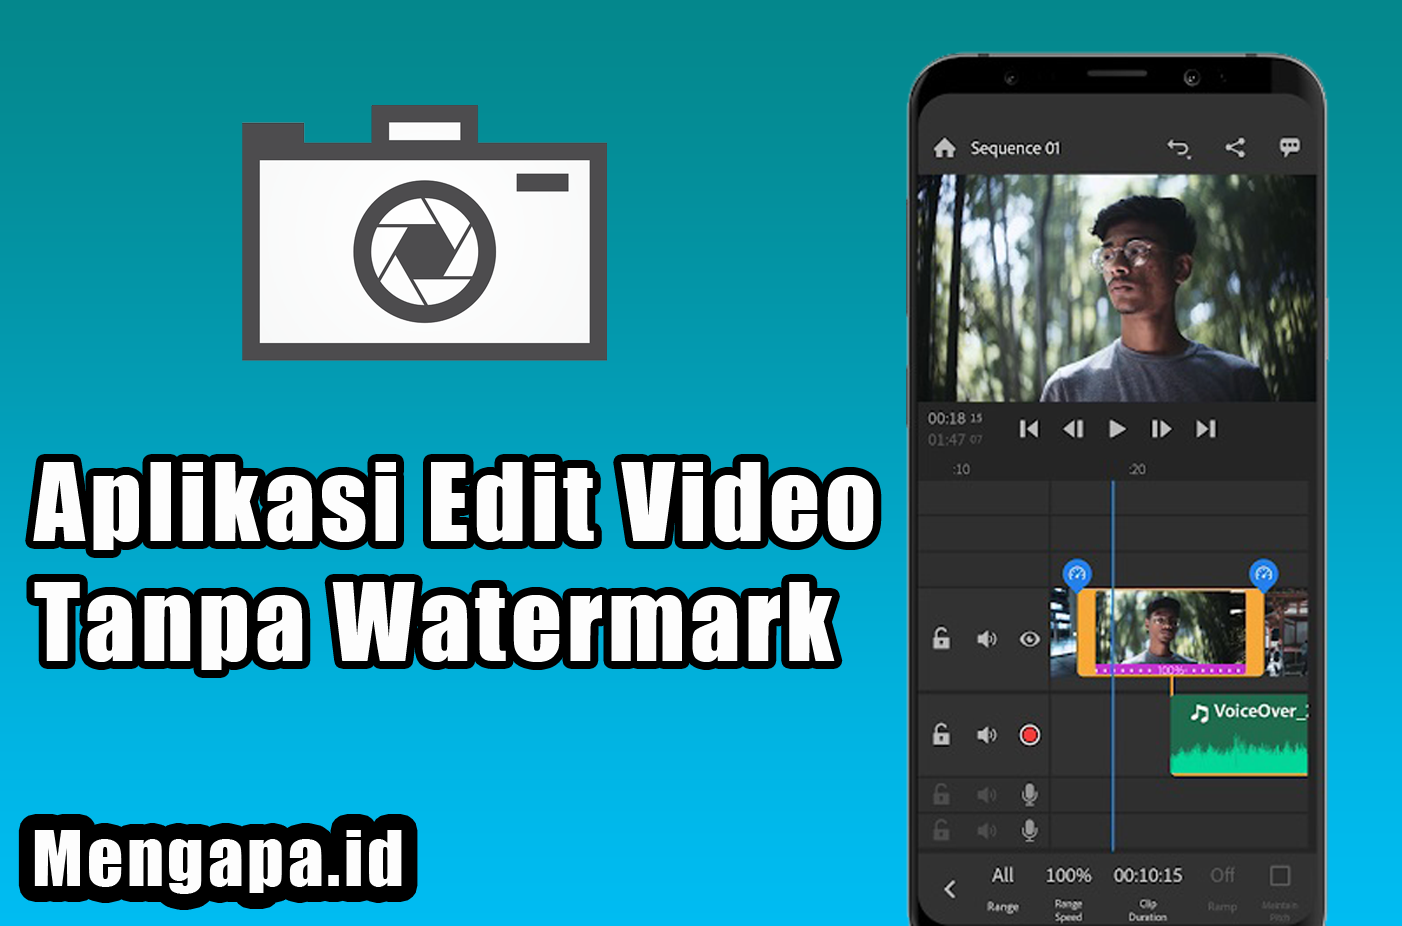 Aplikasi Edit Video Tanpa Watermark